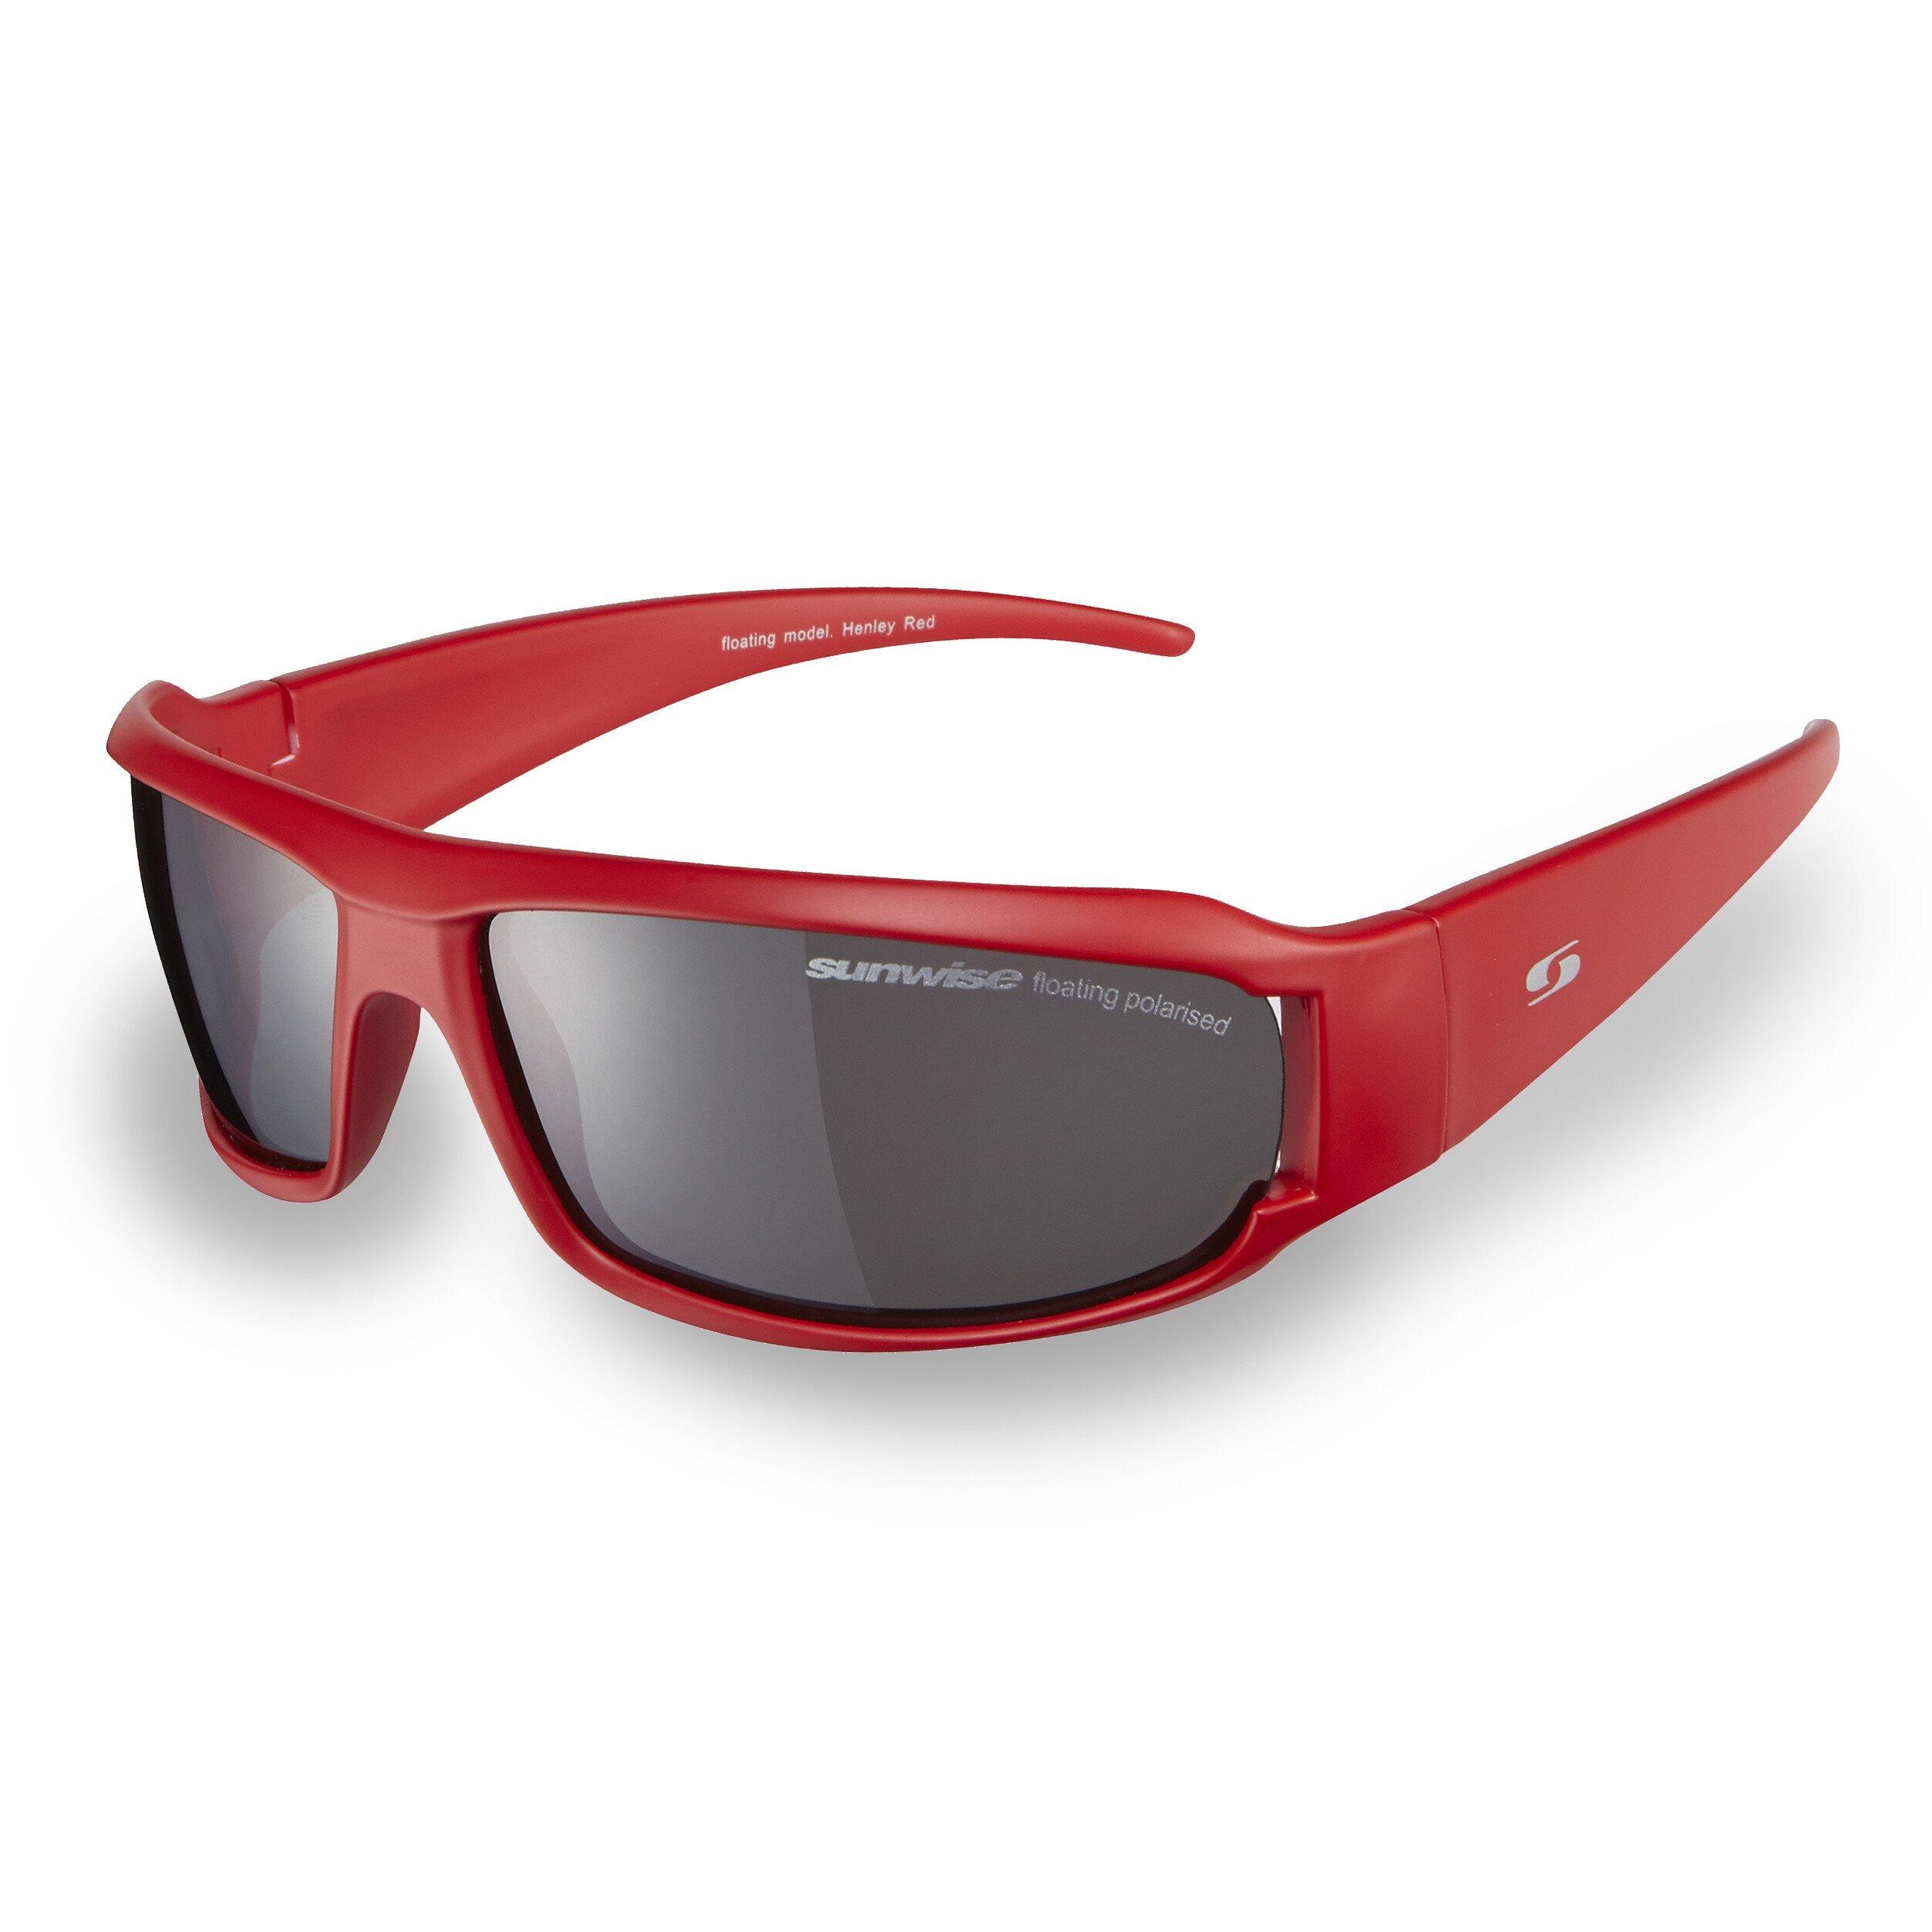 SUNWISE Henley Sports Sunglasses - Category 3